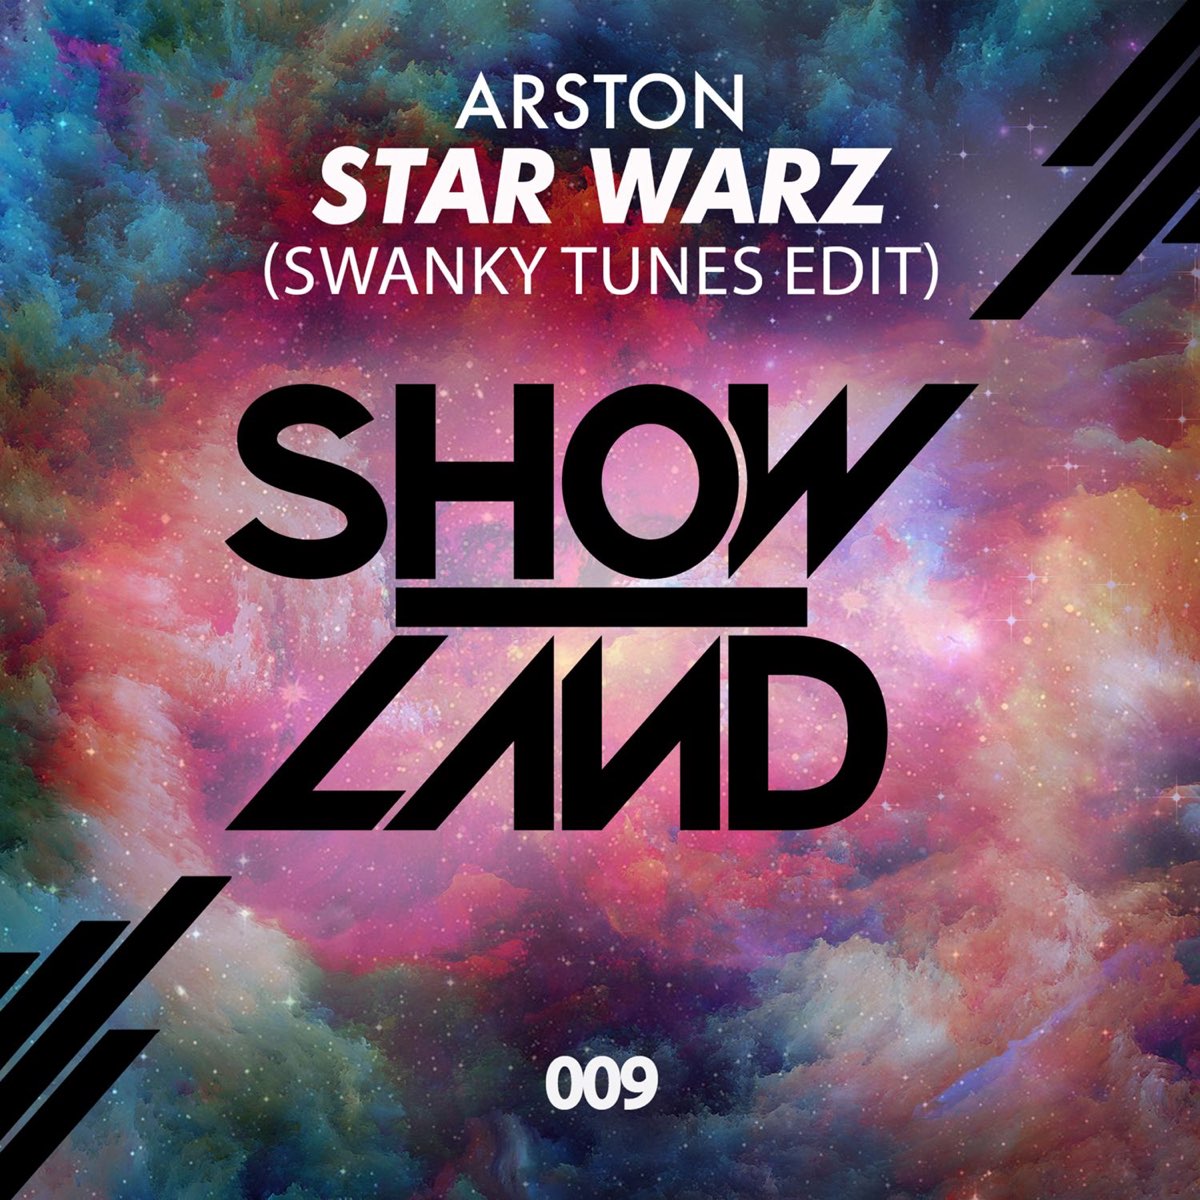 Swanky tunes remix. Swanky Tunes. Arston Star Wars. Swanky Tunes big Love to the Bass.